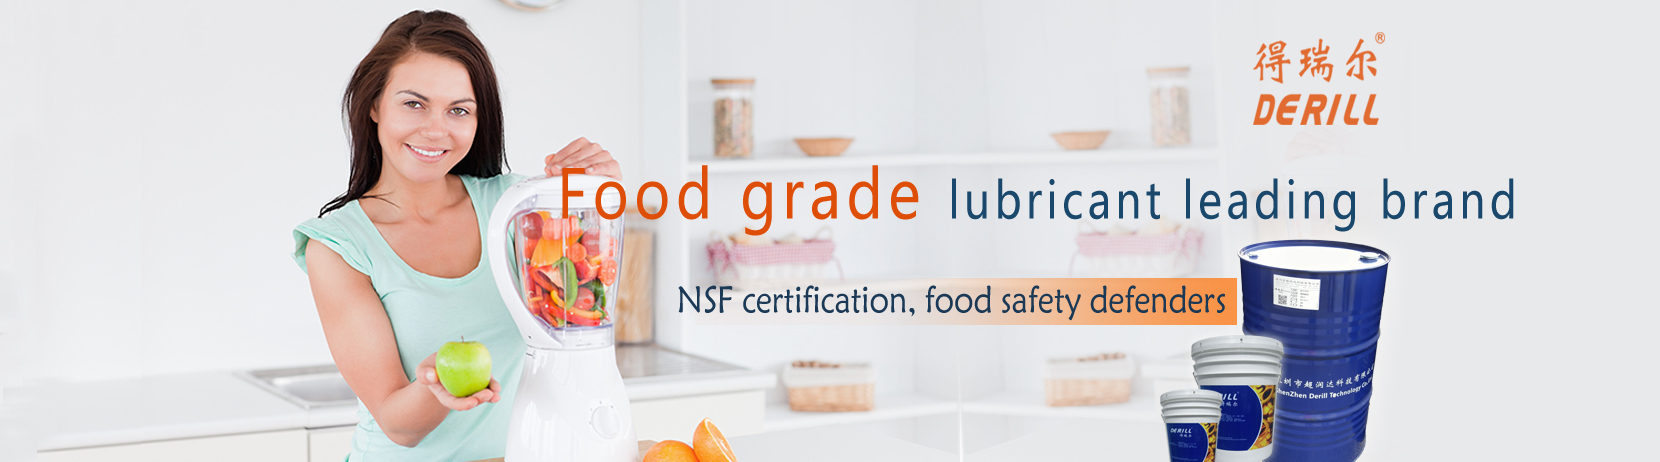 Food grade lubricants